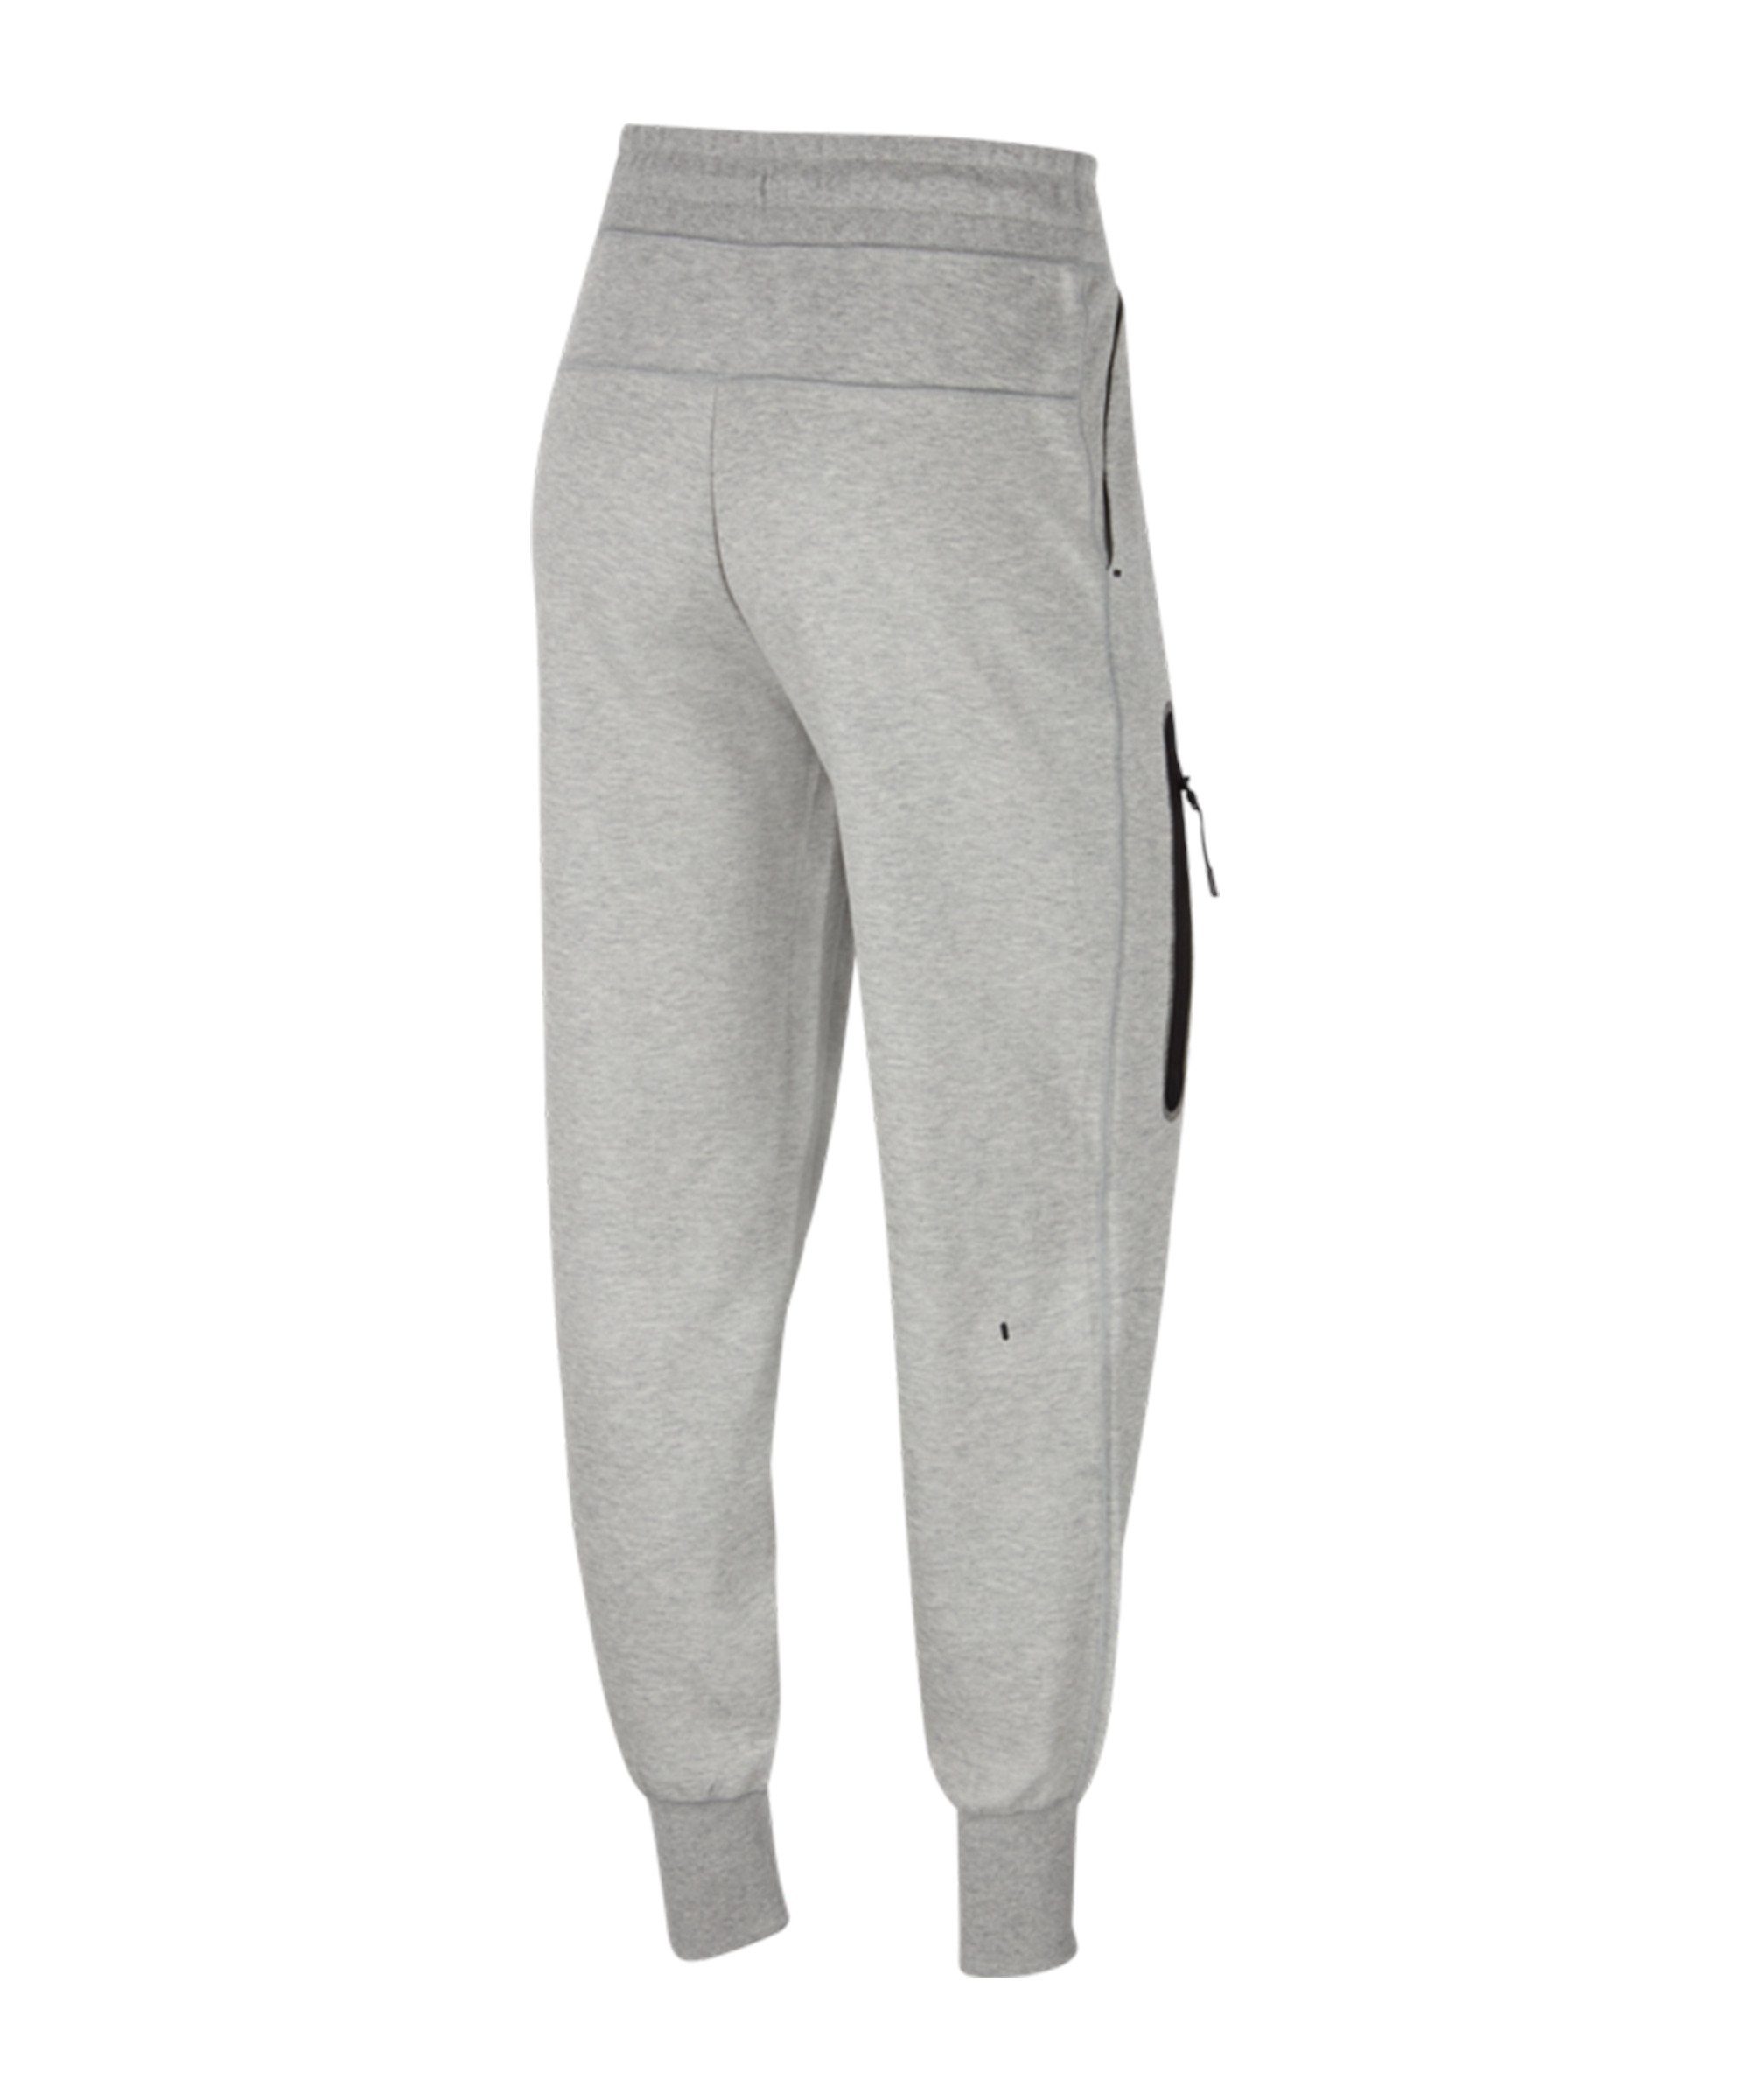 grauschwarz Jogger Tech Jogginghose Pants Fleece Damen Sportswear Nike